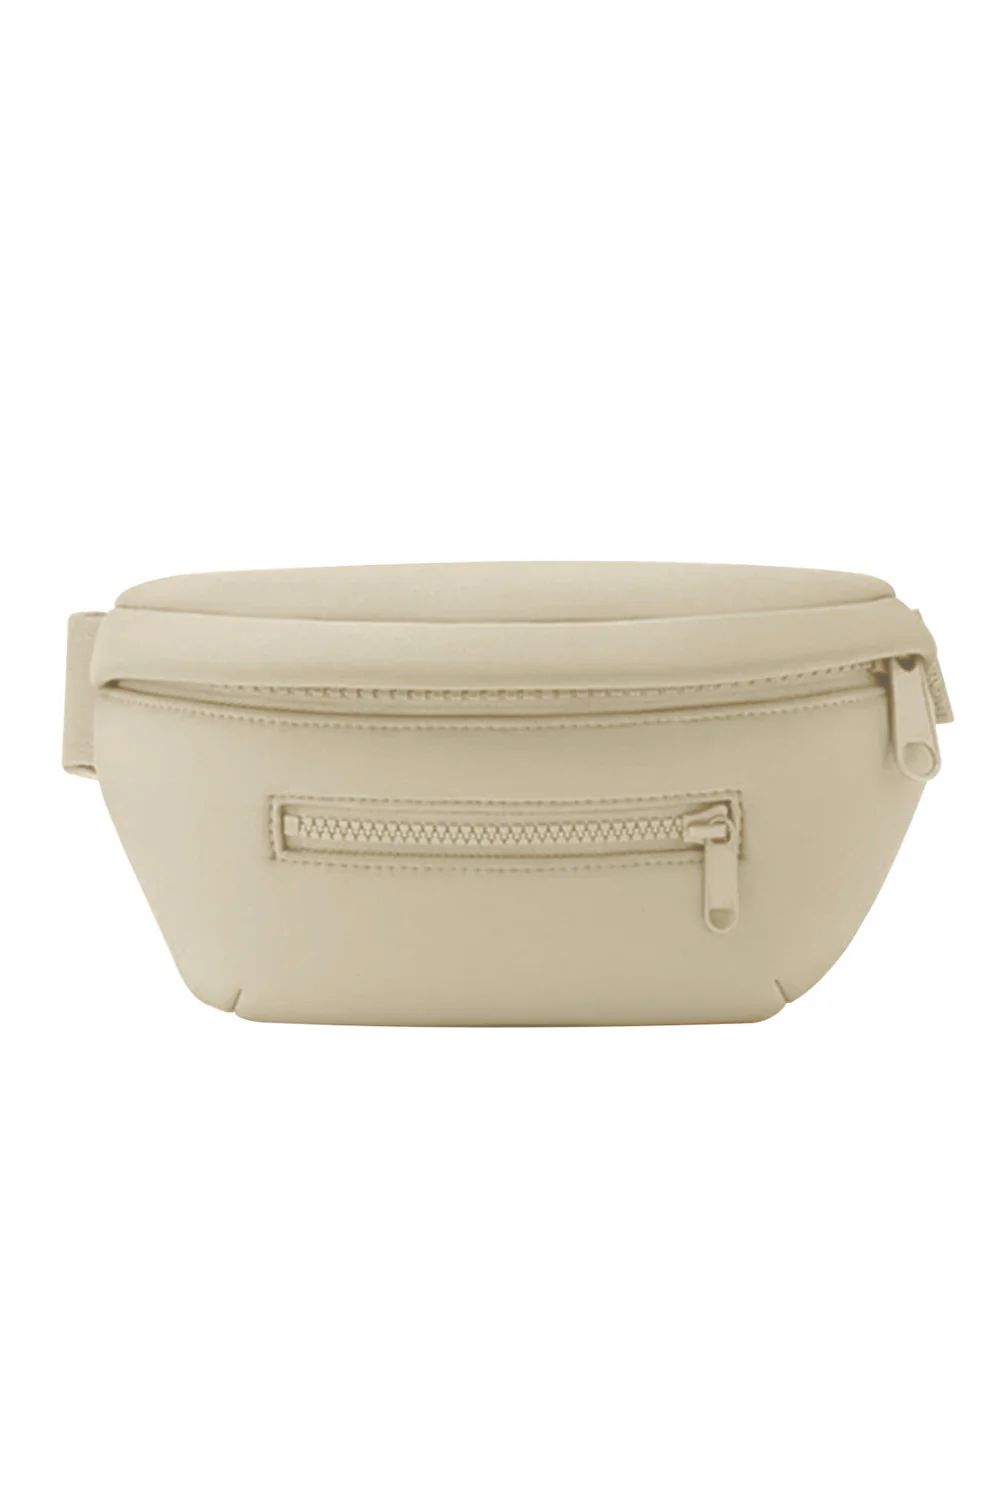 Neoprene Belt Bag- Cream | The Styled Collection